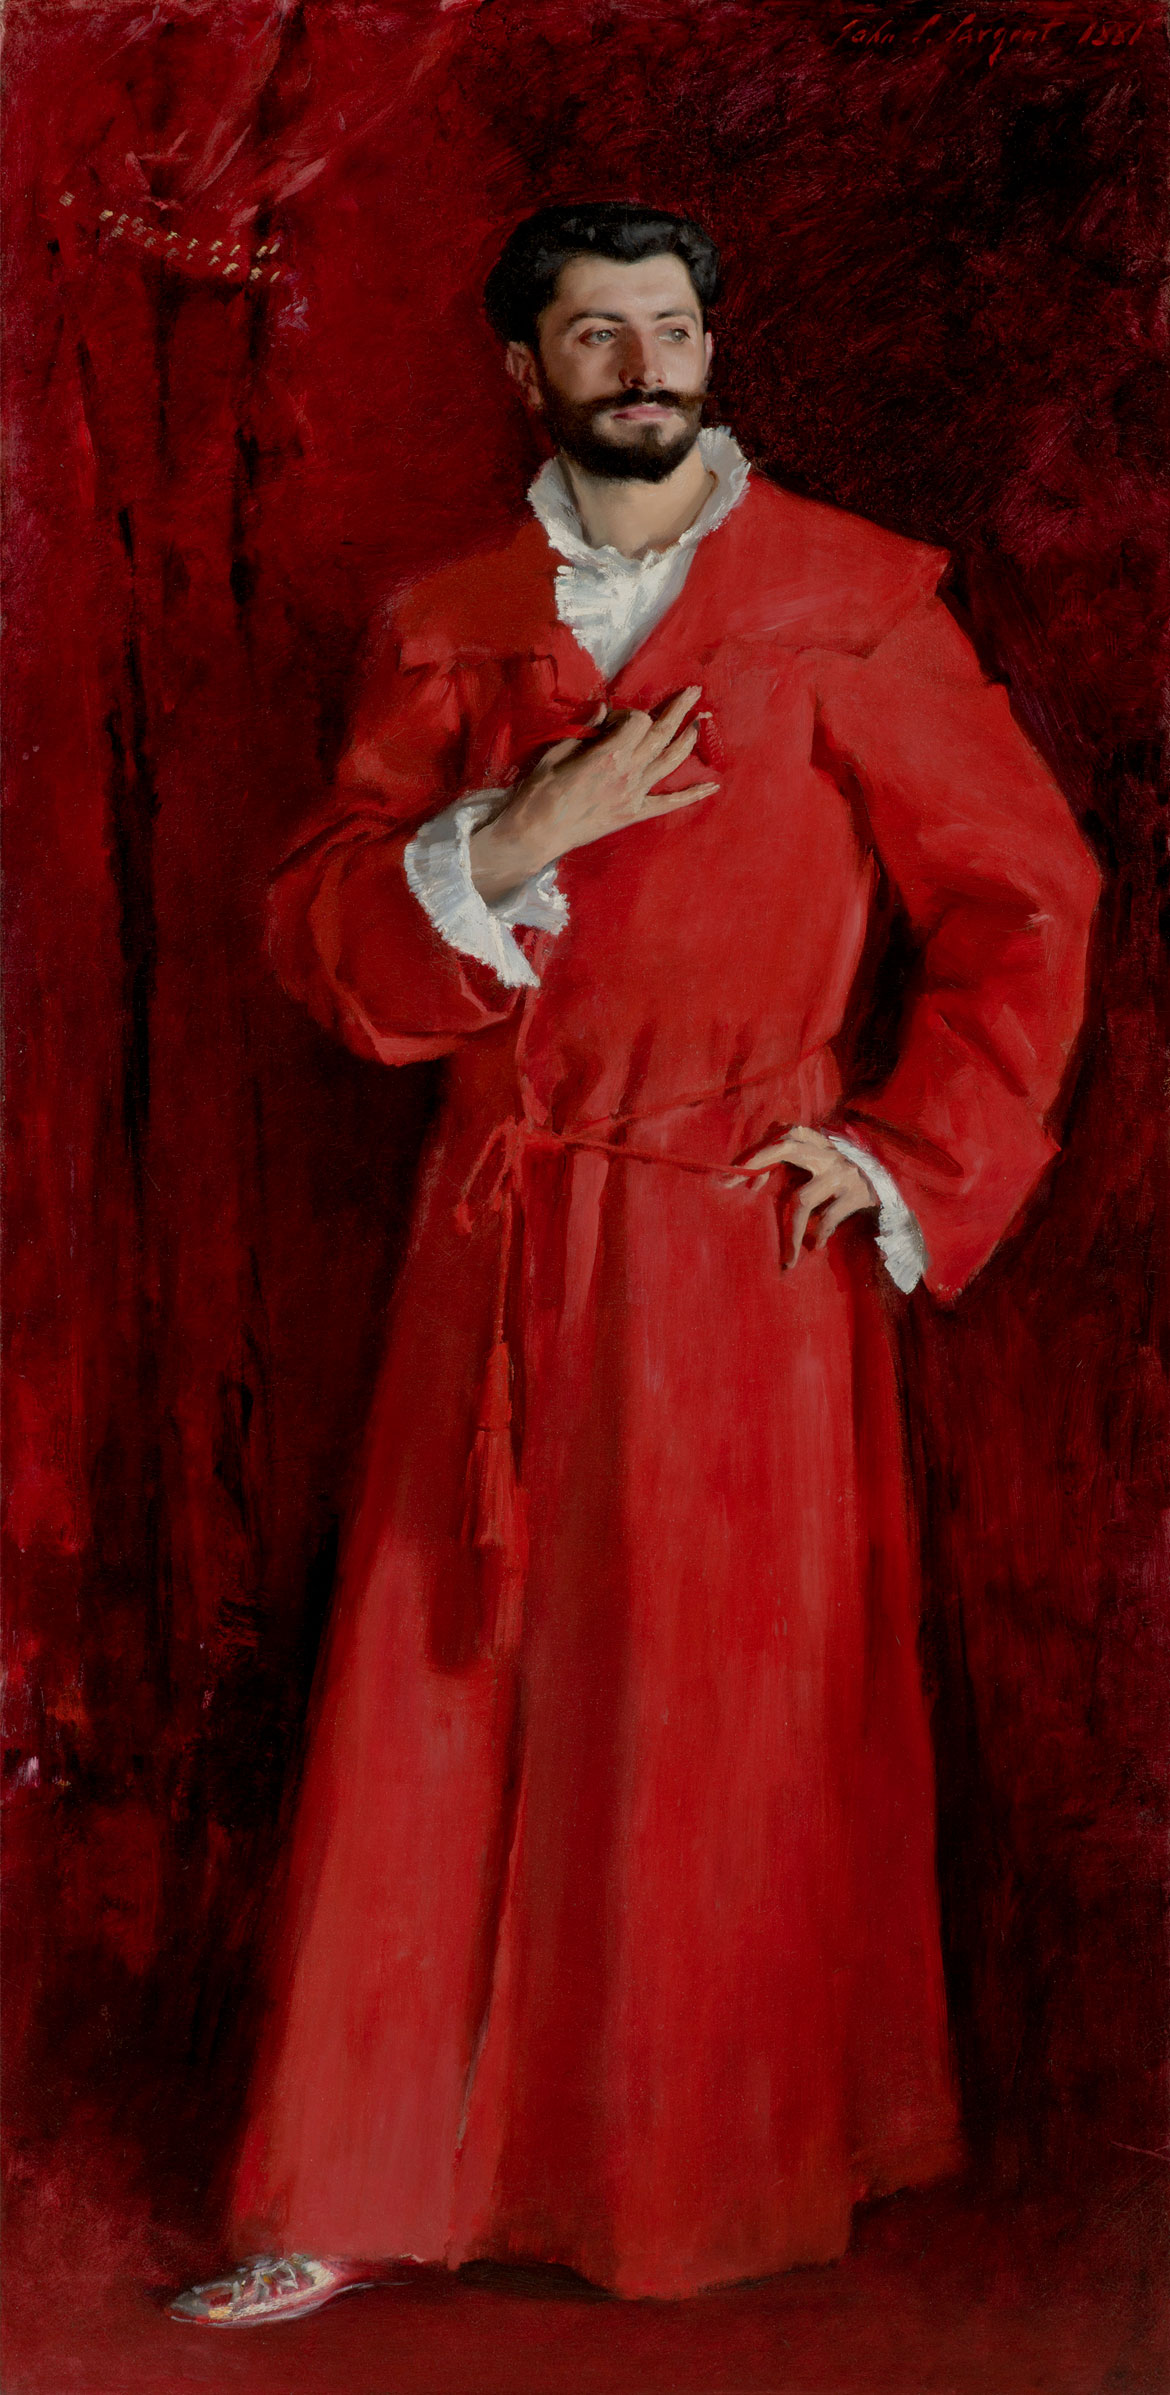 John Singer Sargent, "Dr. Pozzi at Home," 1881, oil on canvas.